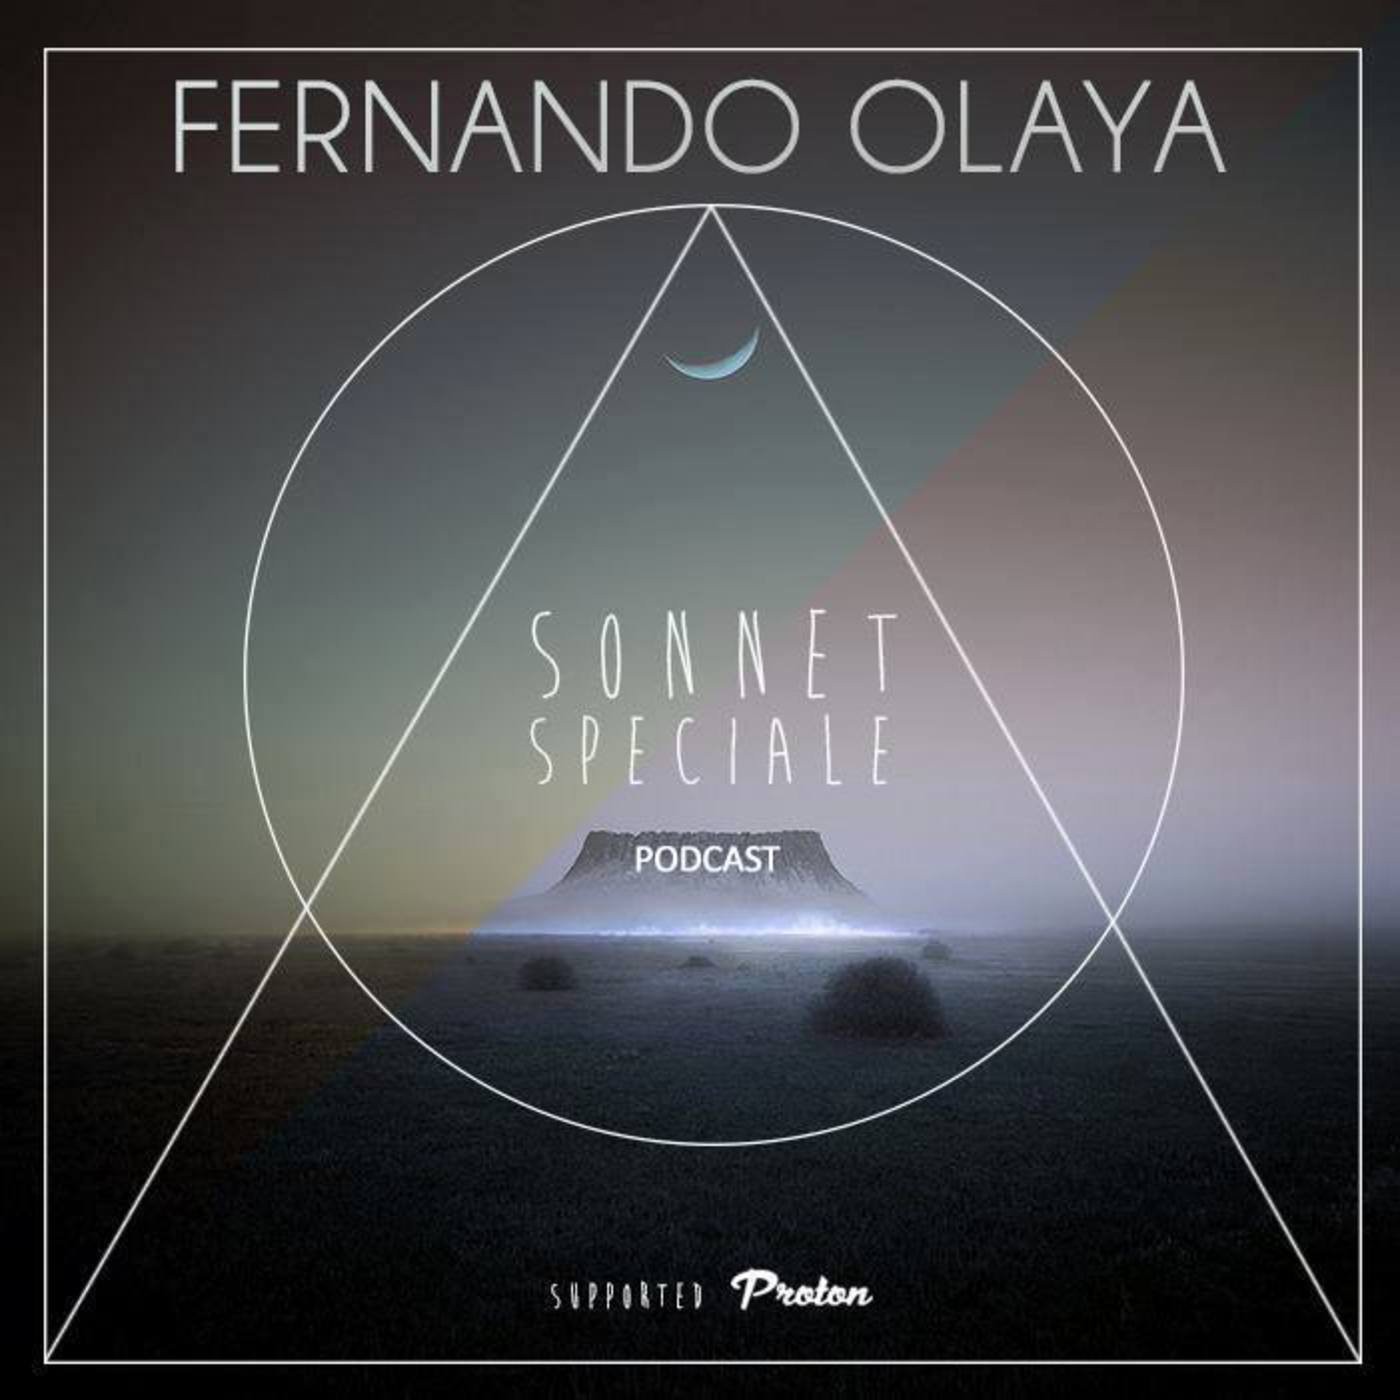 <![CDATA[Podcast Sonnet Speciale with Fernando Olaya]]>